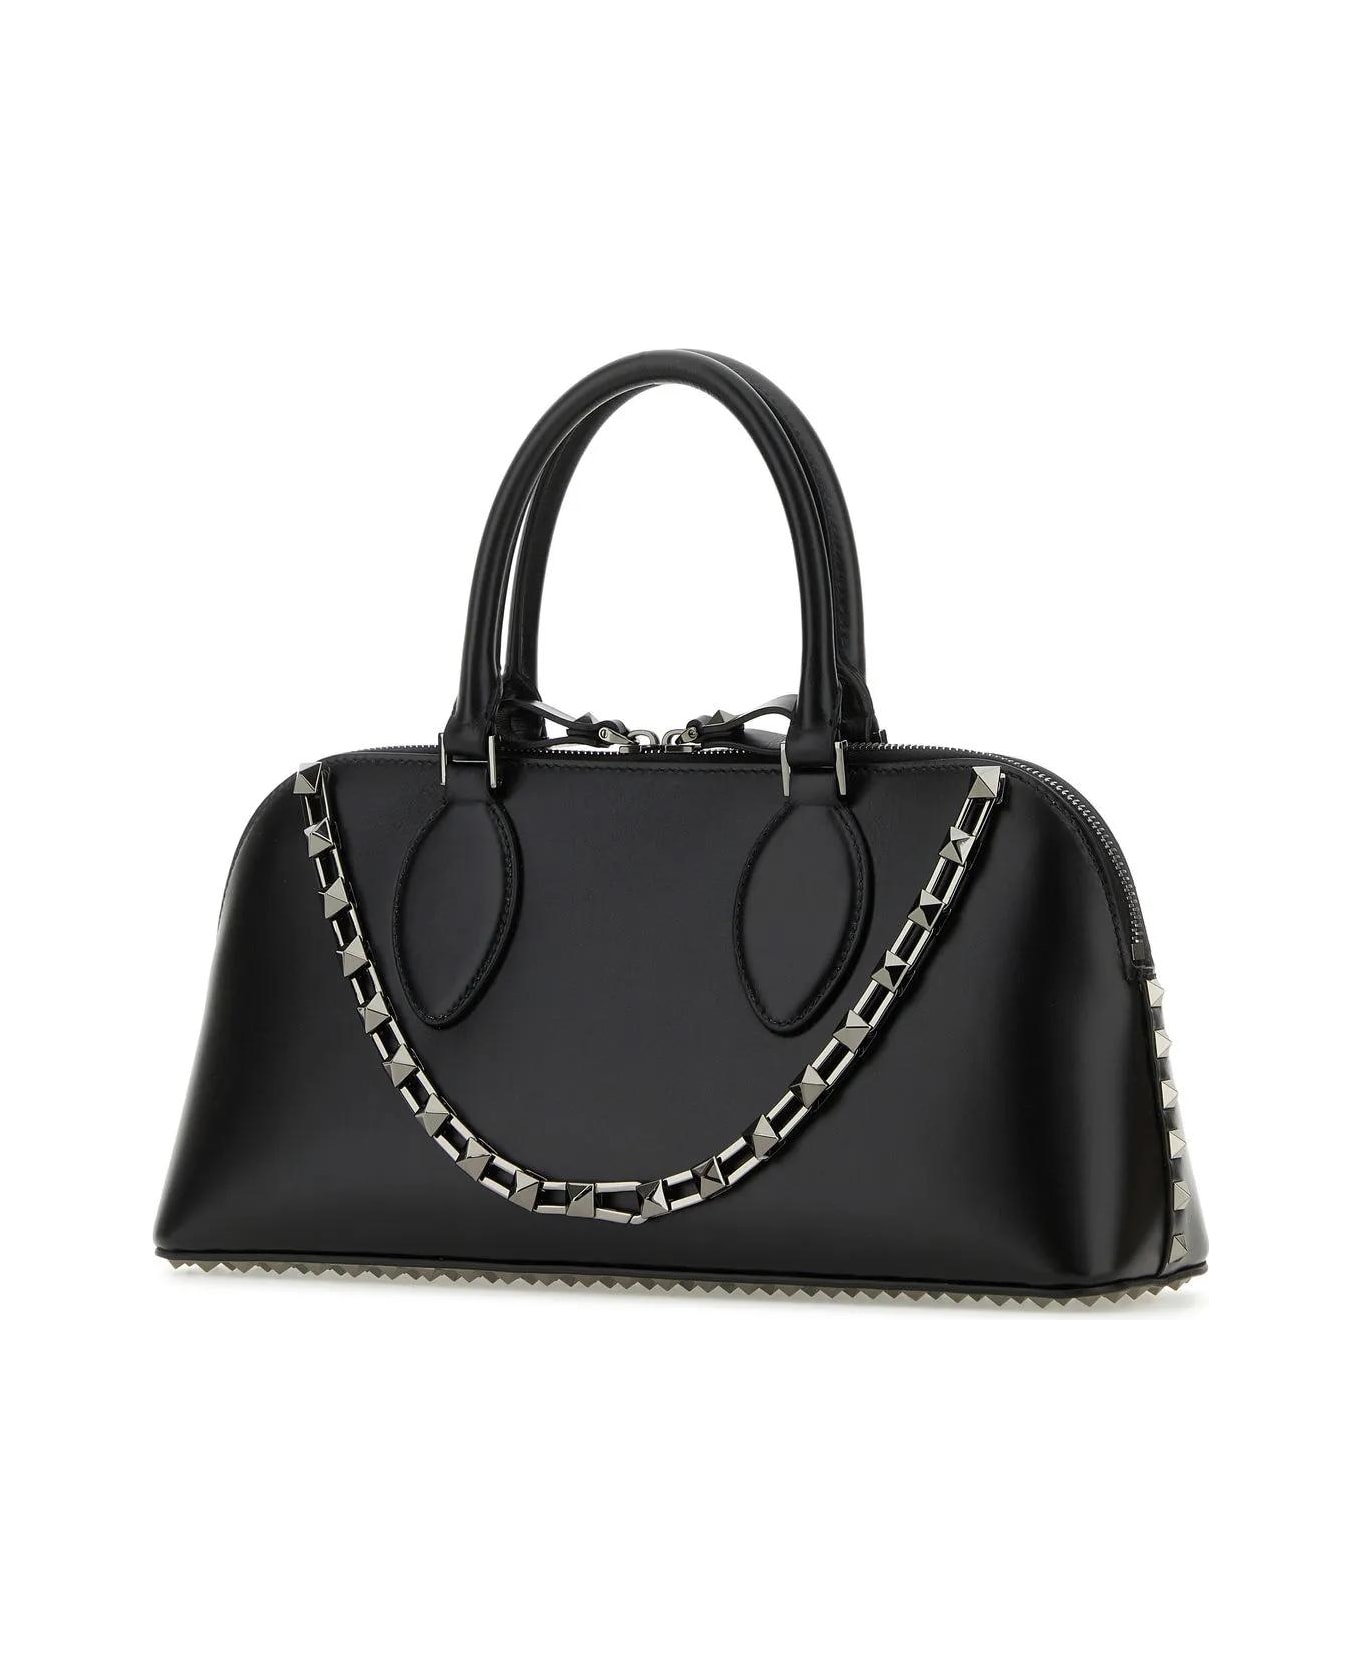 Valentino Garavani Black Leather Rockstud Handbag - NERO